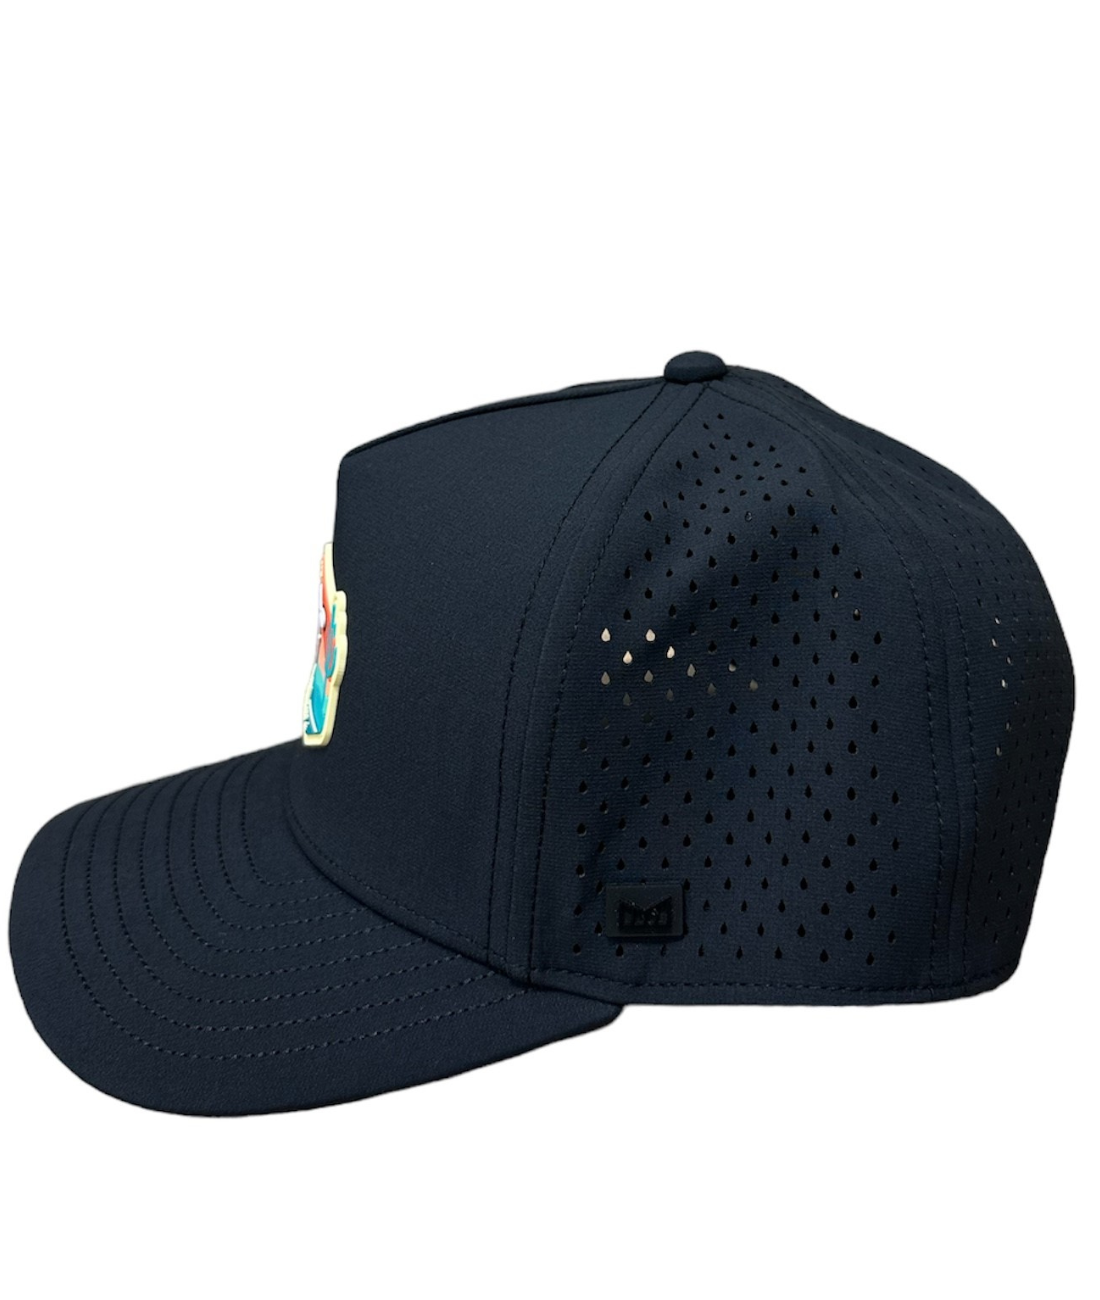 Odyssey Black Melin Hat